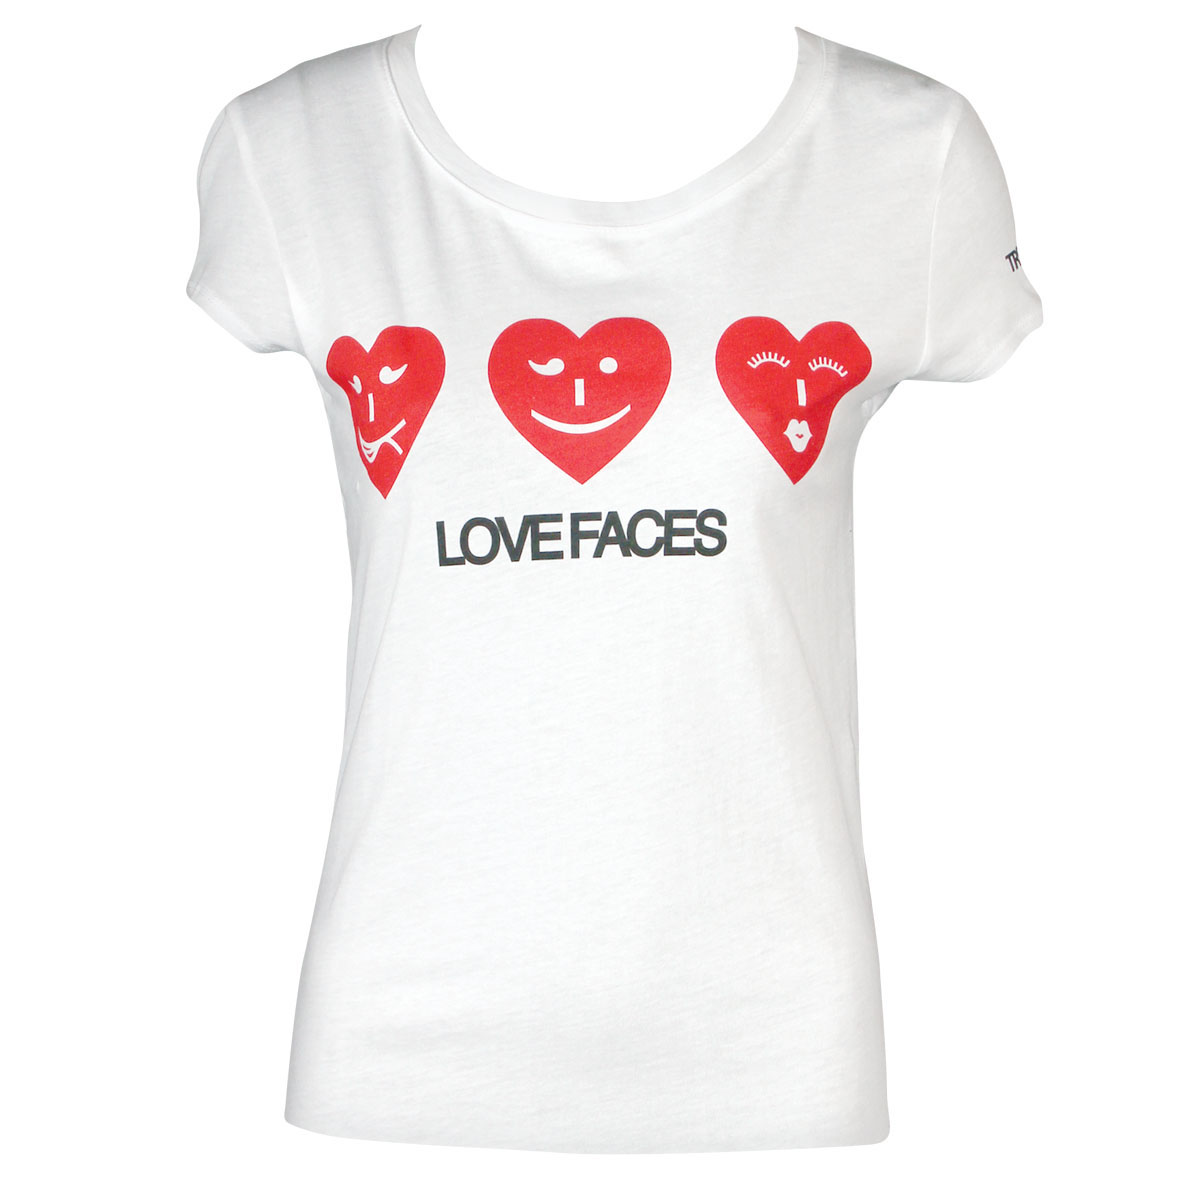 Trey Songz Love Faces Juniors T-Shirt White 